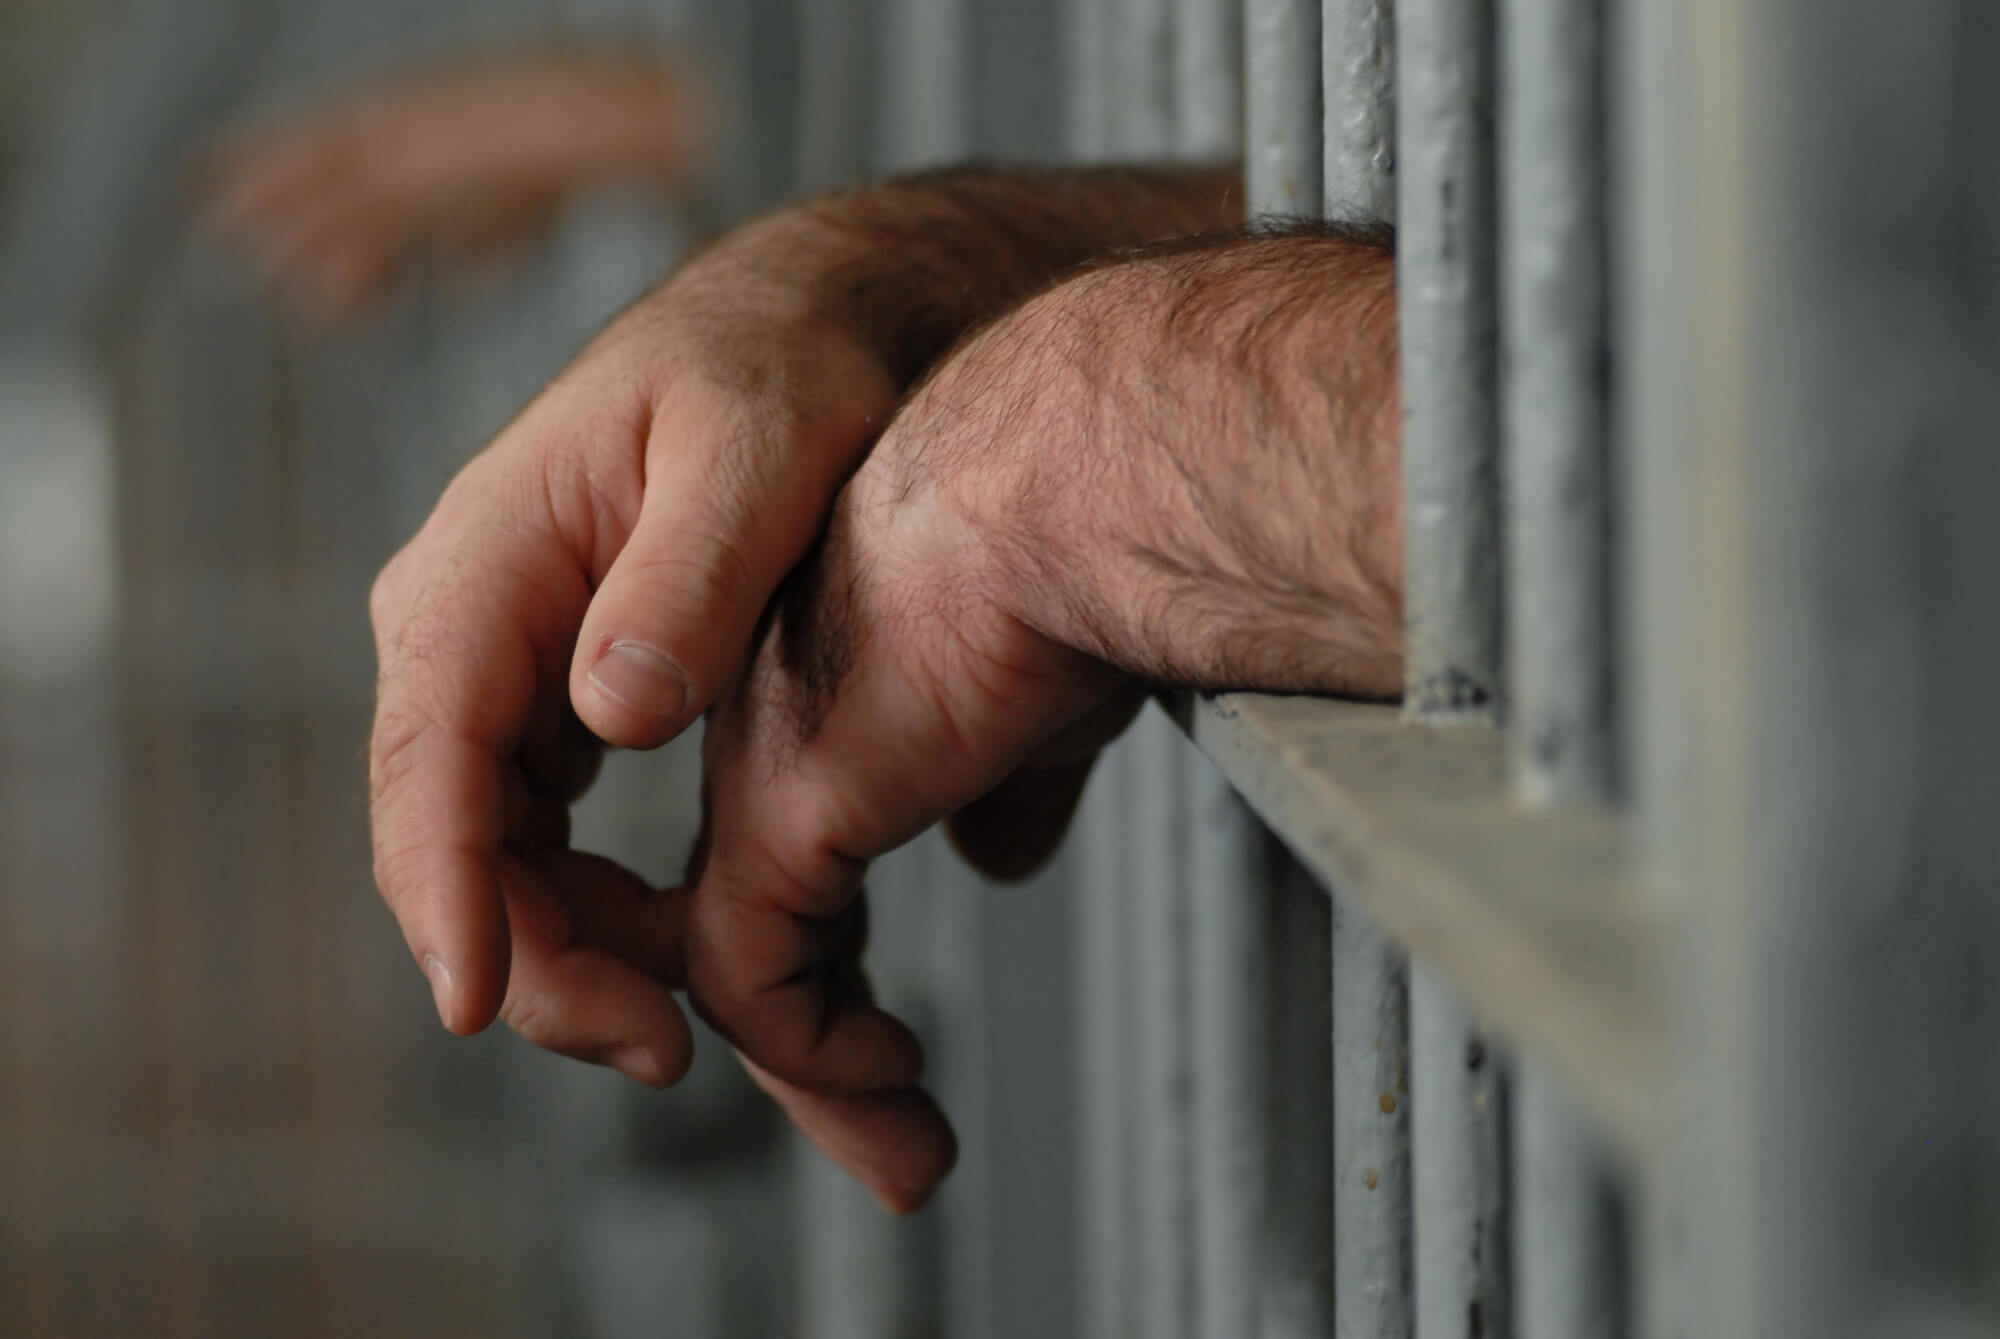 Voting behind bars. Who do Ukrainian prisoners support?